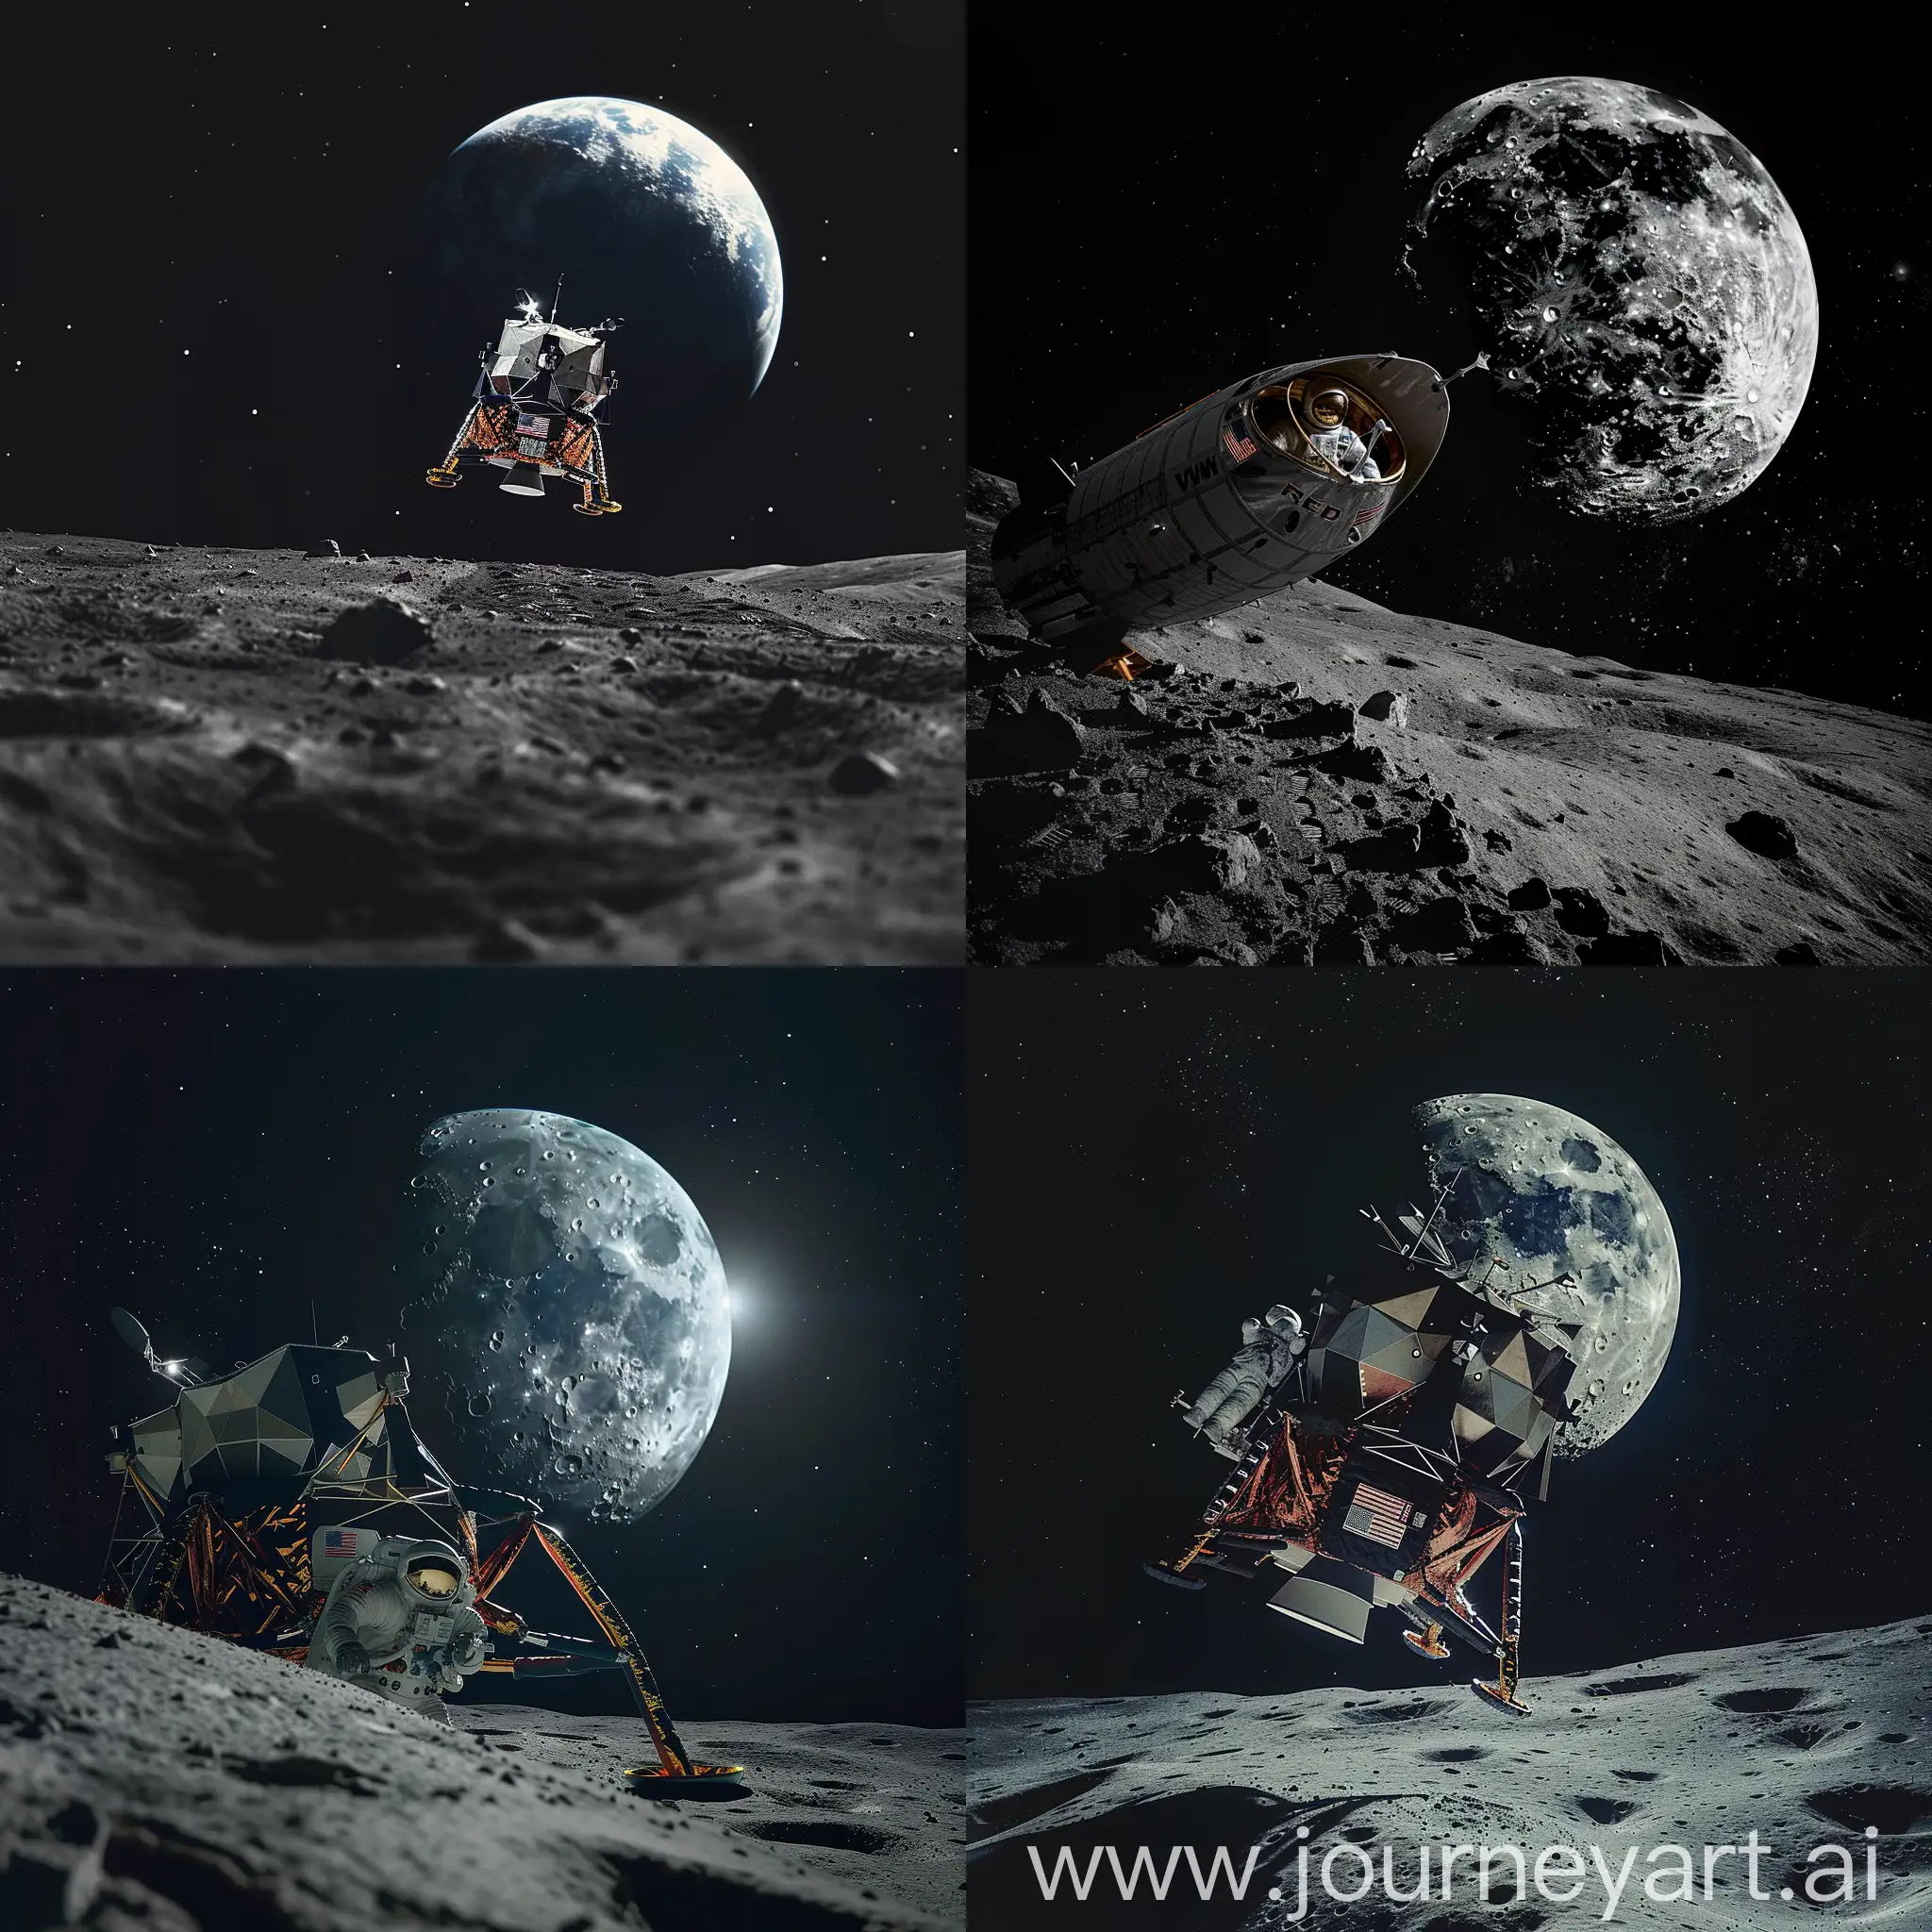 Solitary-Lunar-Explorer-Ascending-towards-Earth